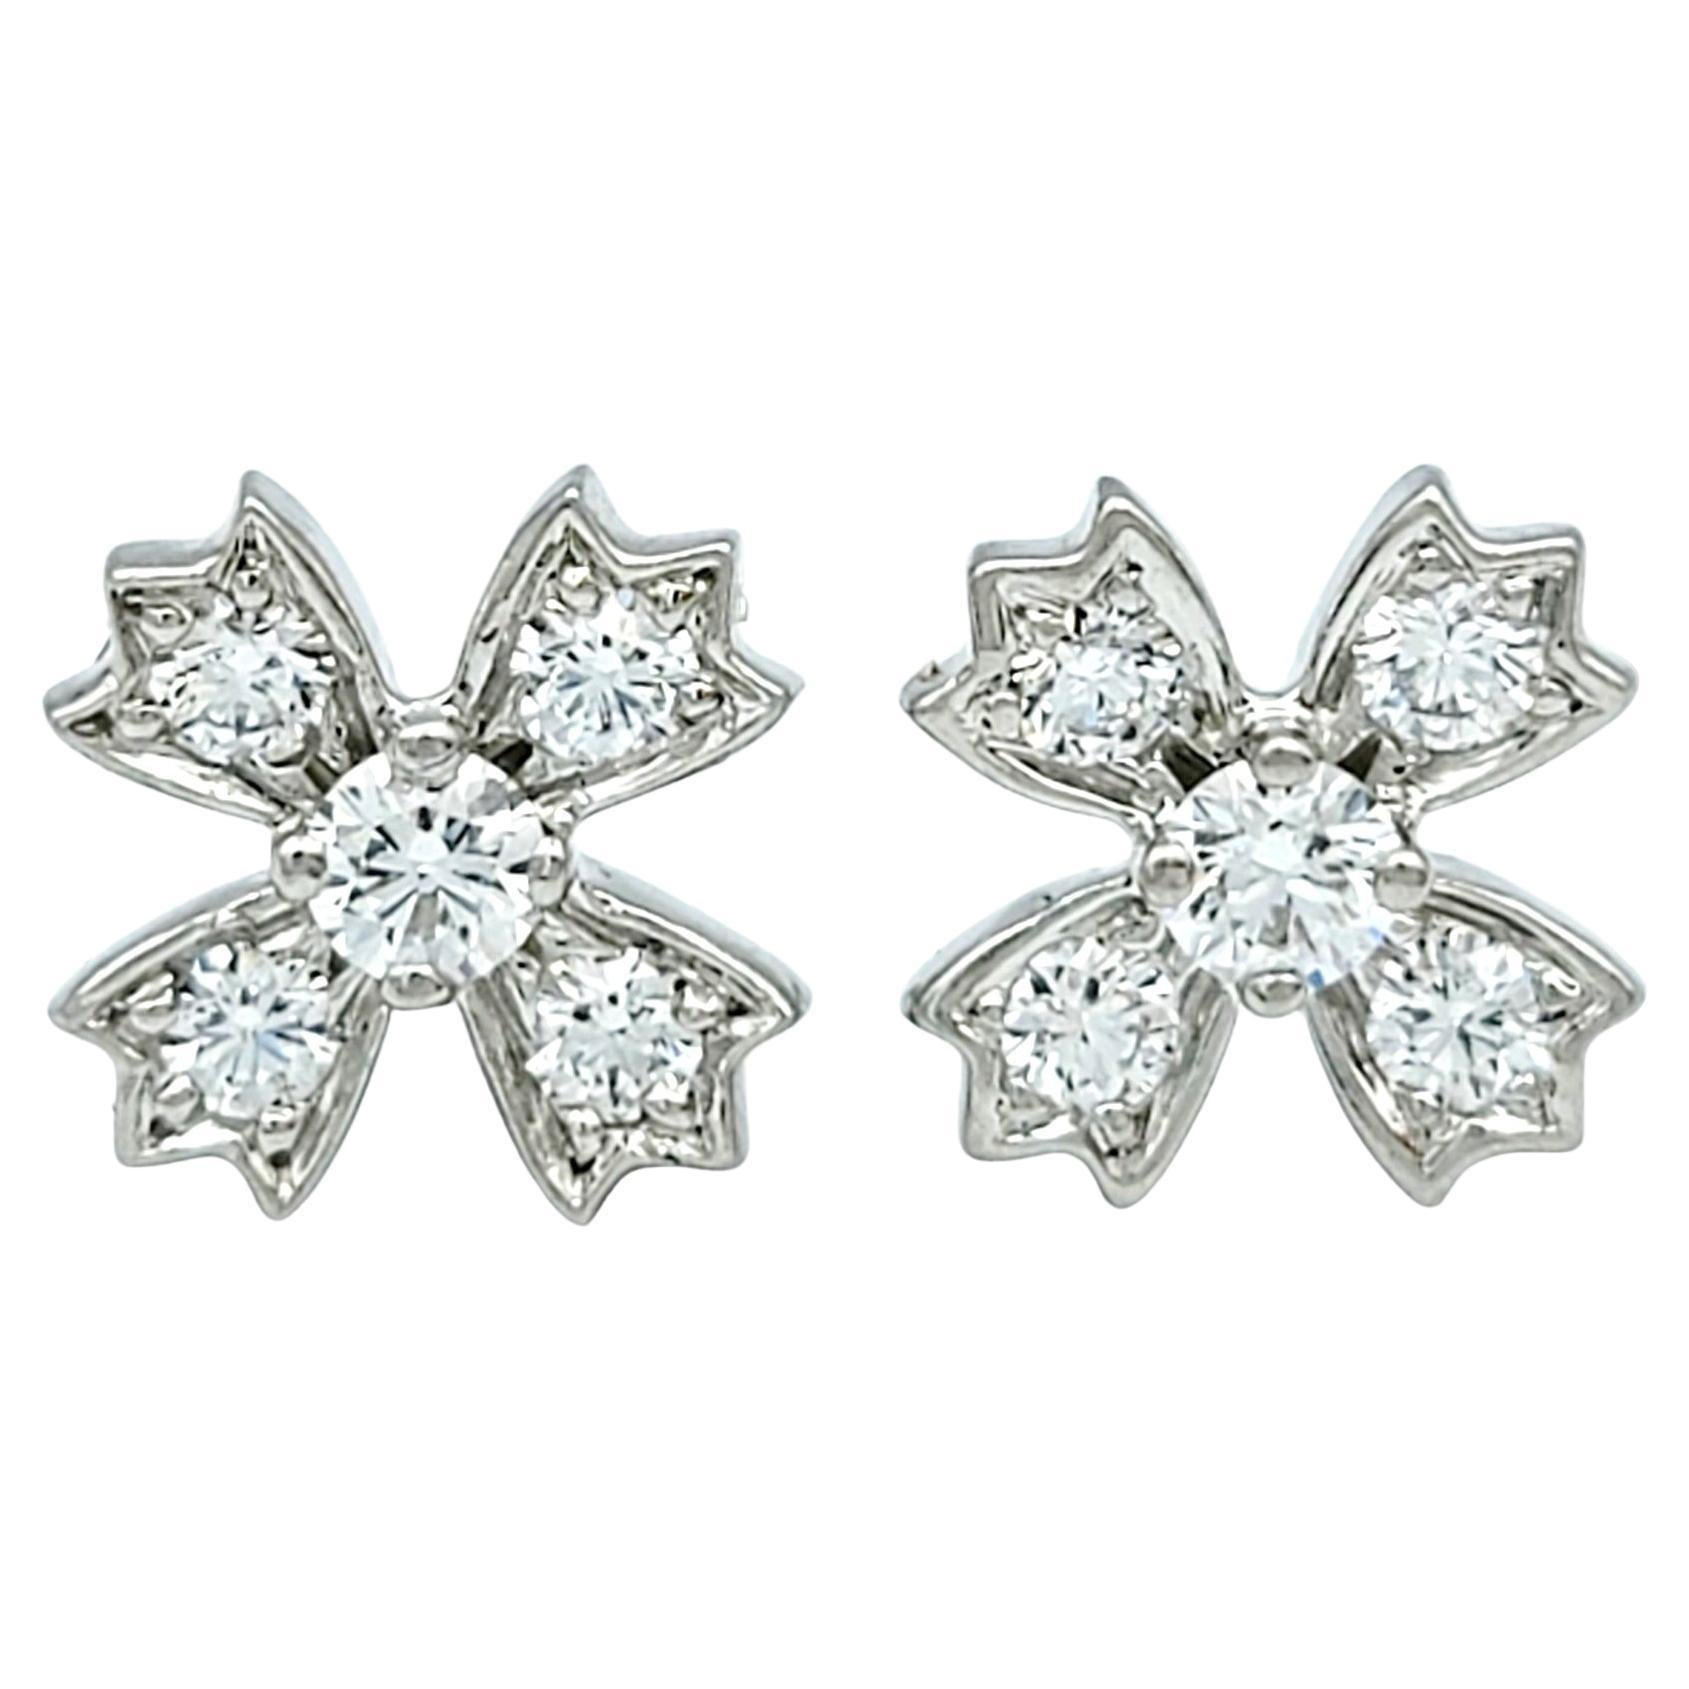 Tiffany & Co. Diamond Snowflake Motif Stud Earrings Set in Platinum